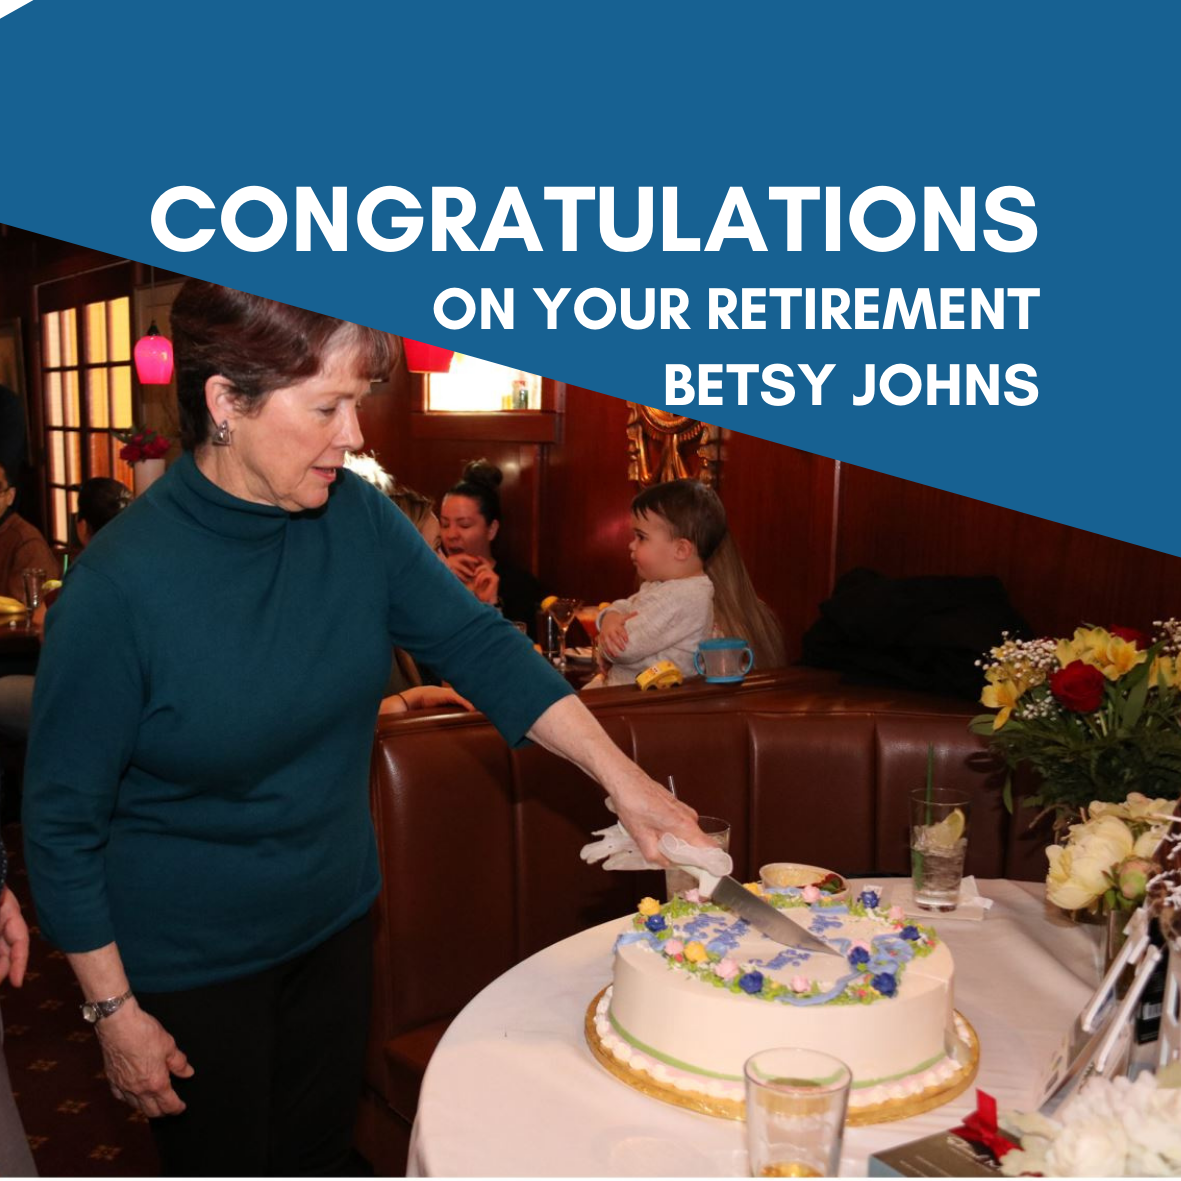 Congratulations, Betsy Johns!